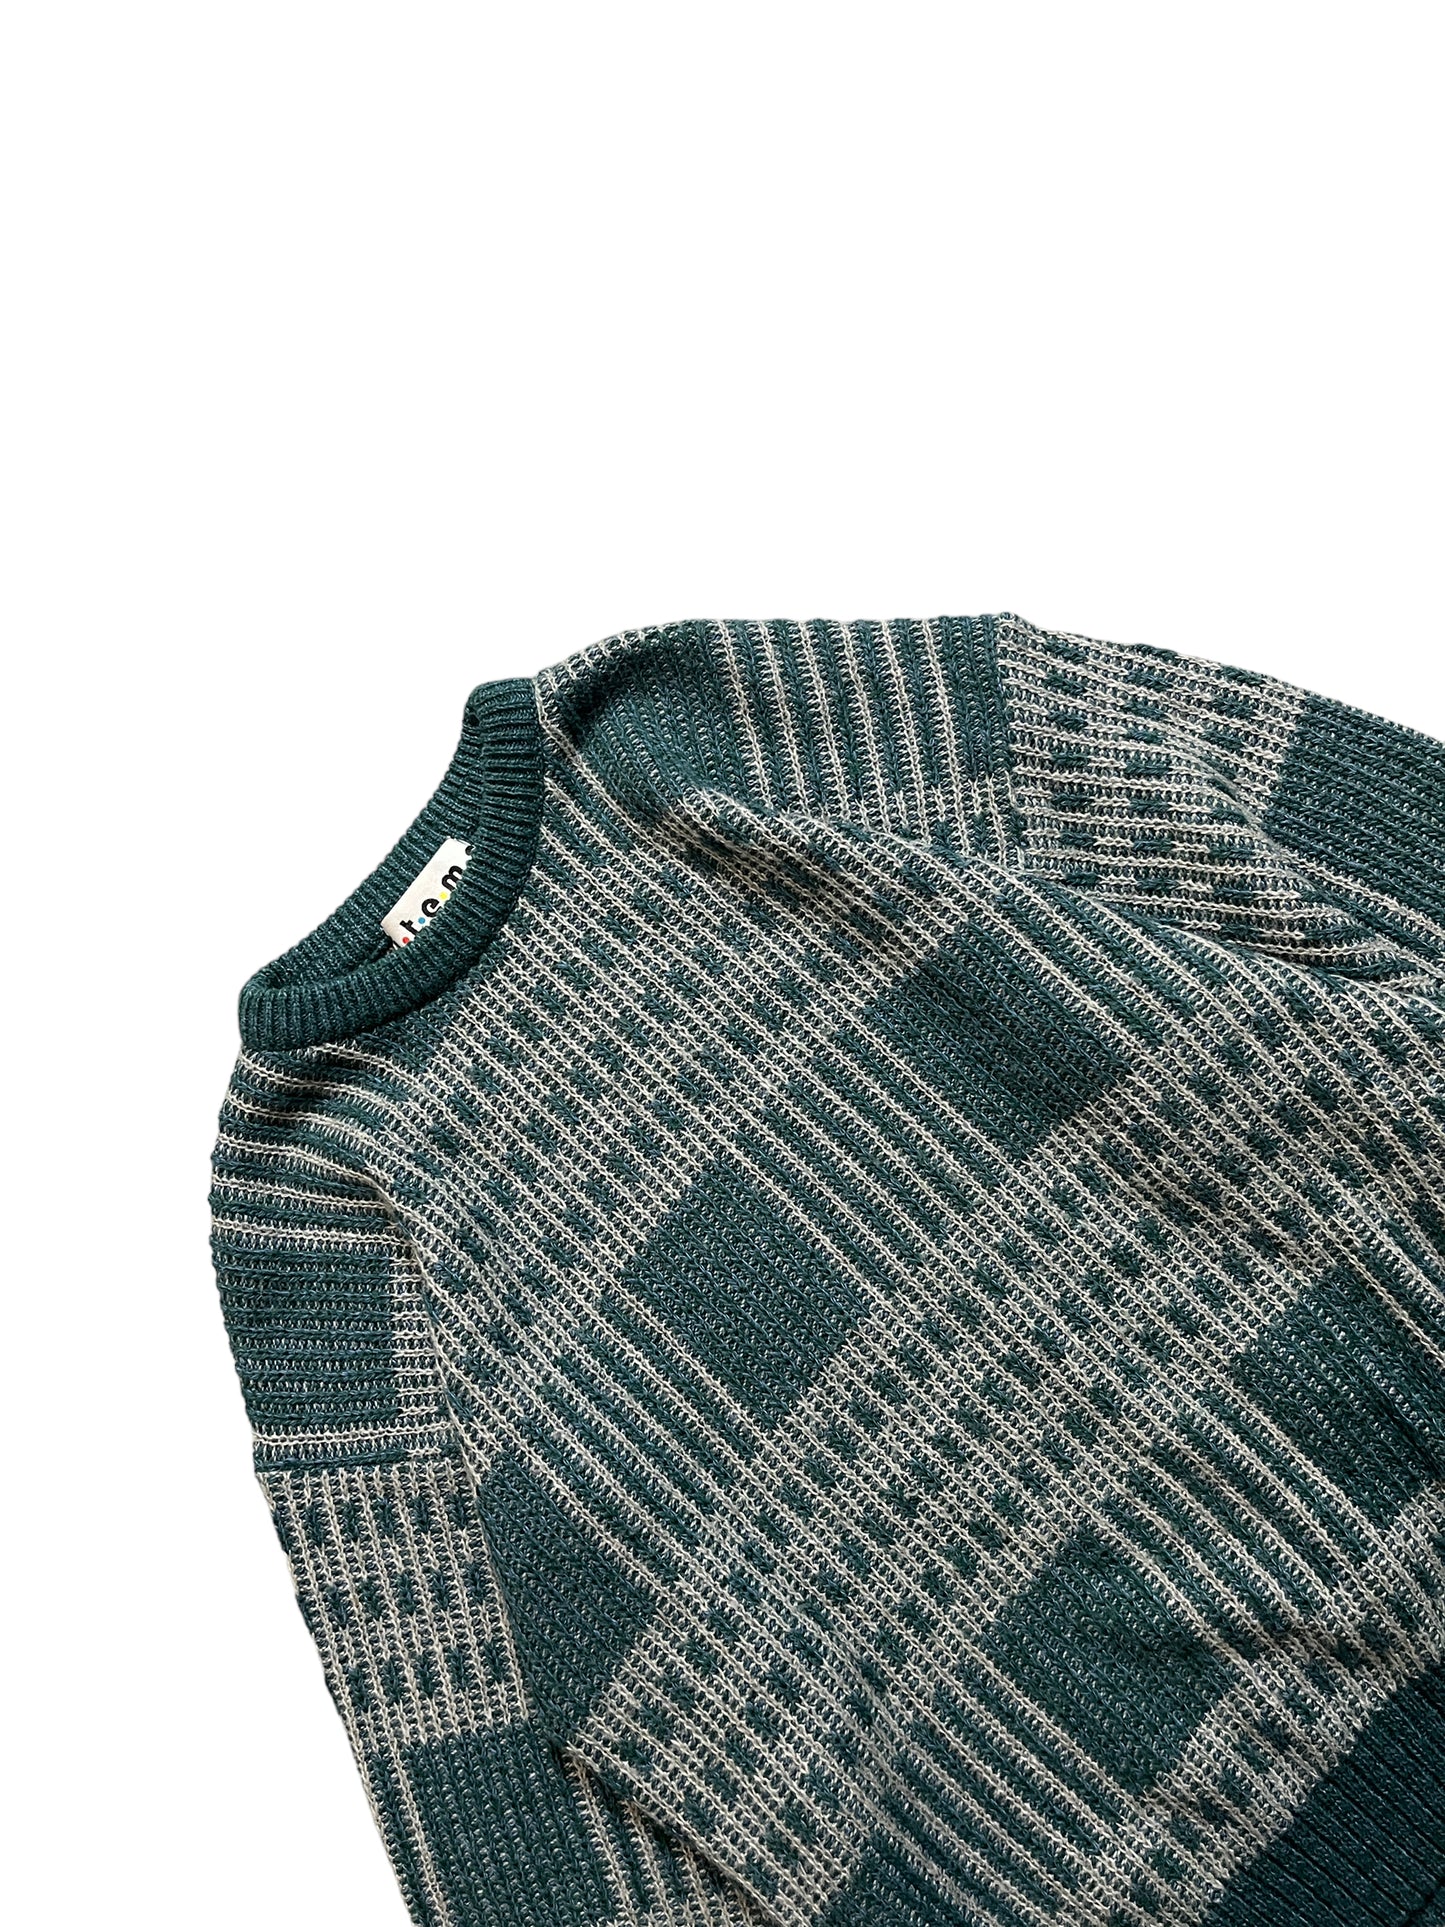 Vintage "I.T.E.M.S" Knit Sweater